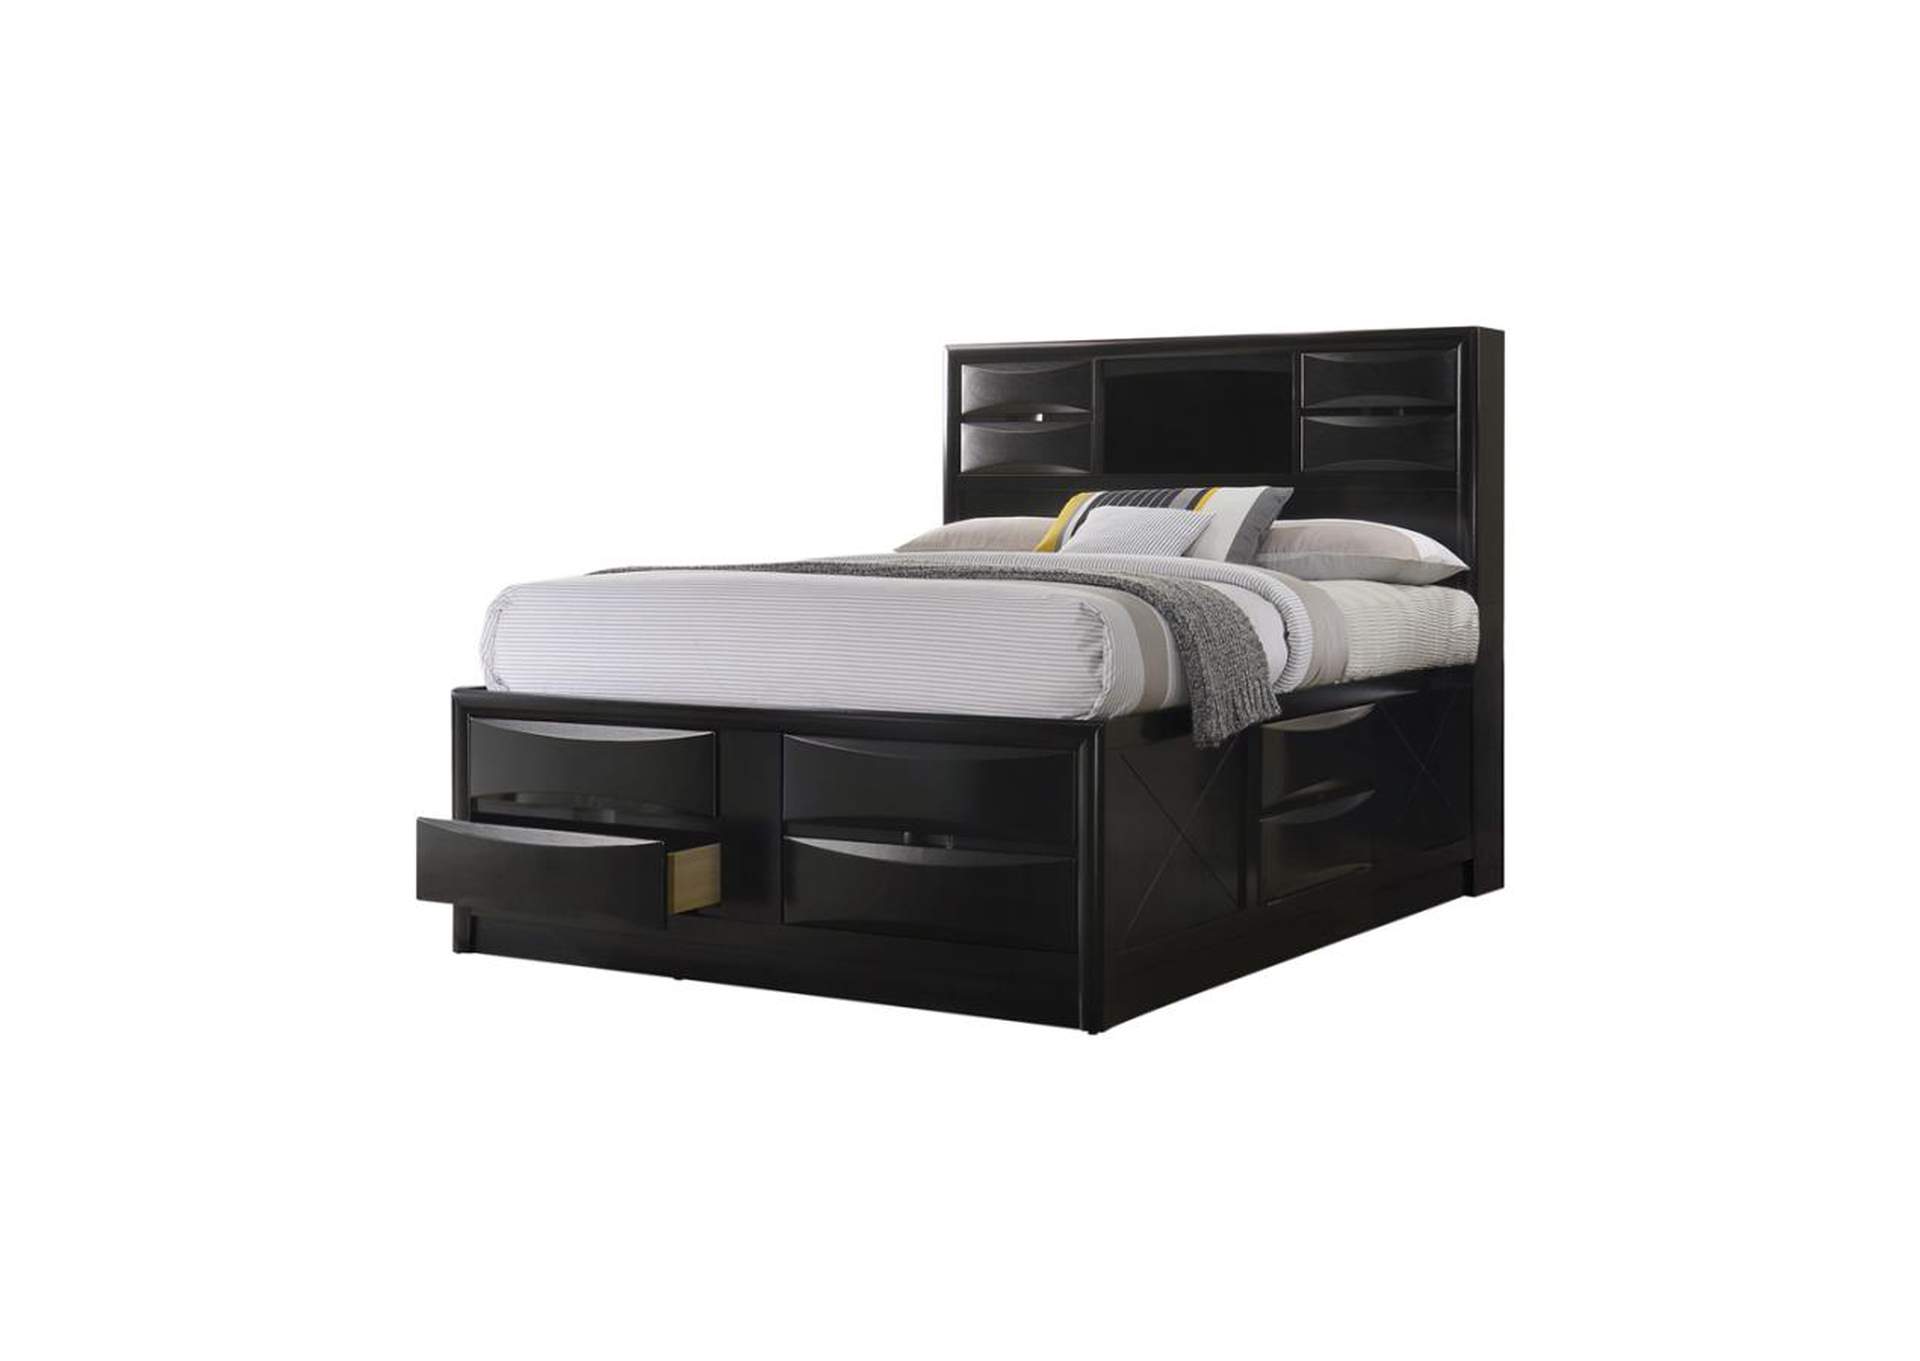 Briana California King Platform Storage Bed Black,Coaster Furniture